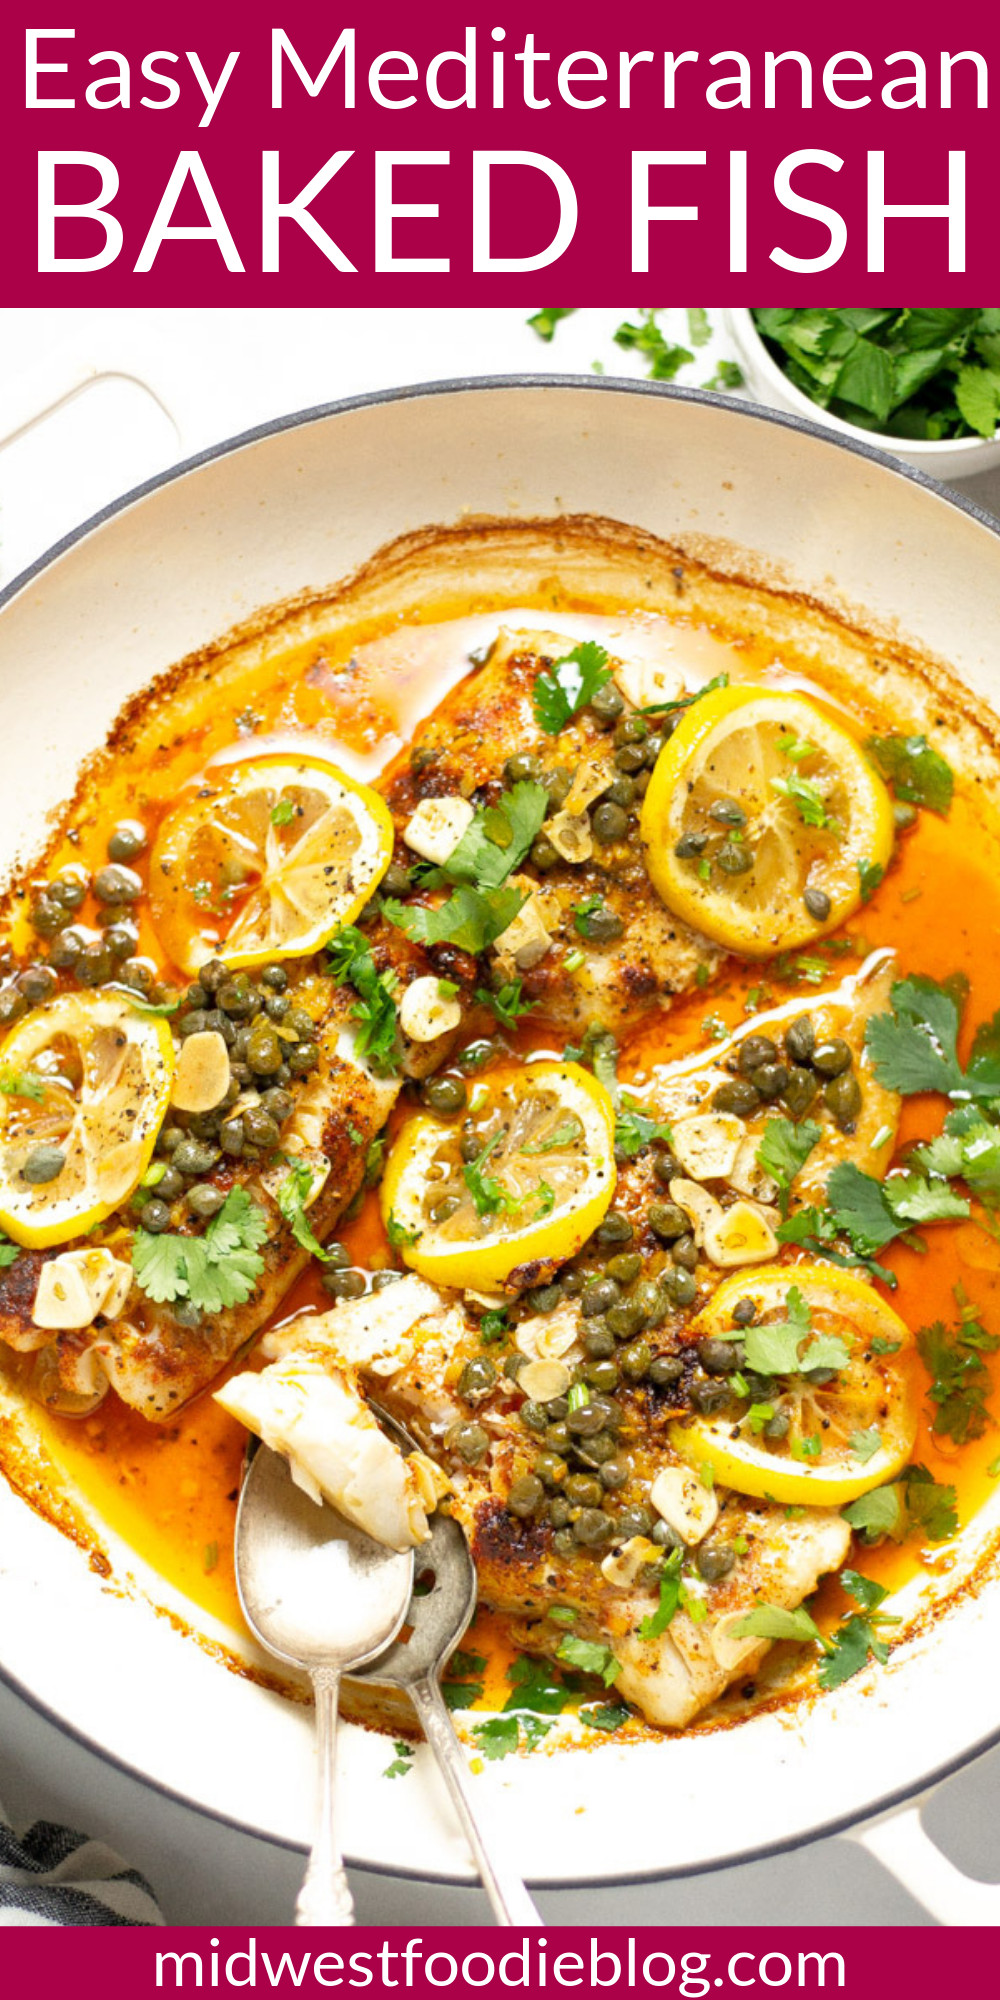 Mediterranean Diet Fish Recipes
 Mediterranean Fish Recipe